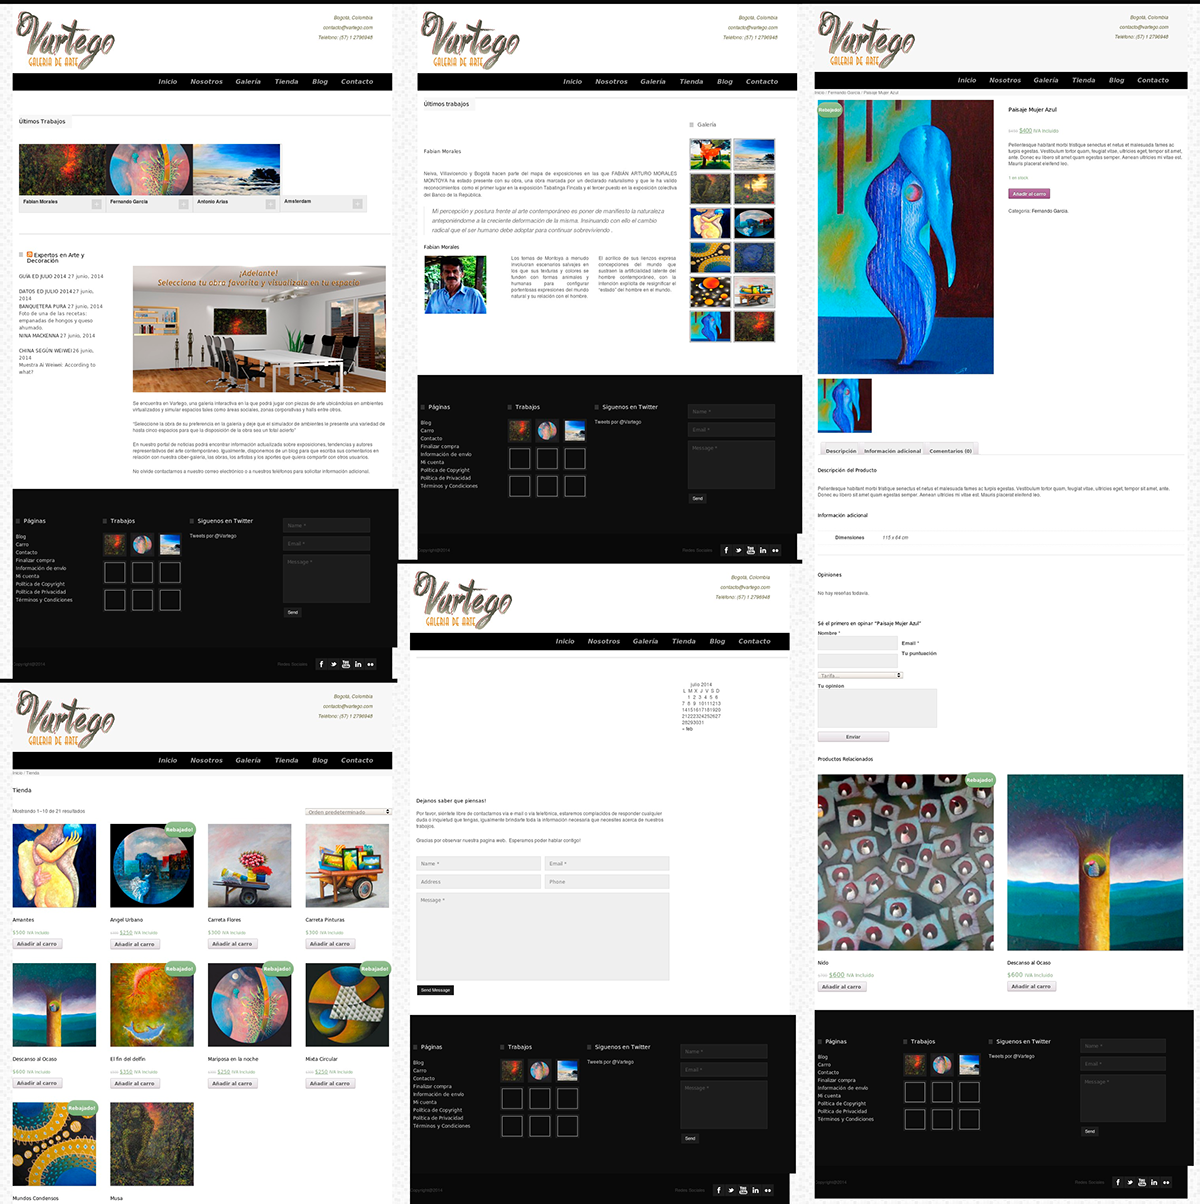 rediseño redesign g3k g3kdigital edga rgutierrez Diseño web rediseño web web redesign vartego Art Gallery  Galeria de arte colombia